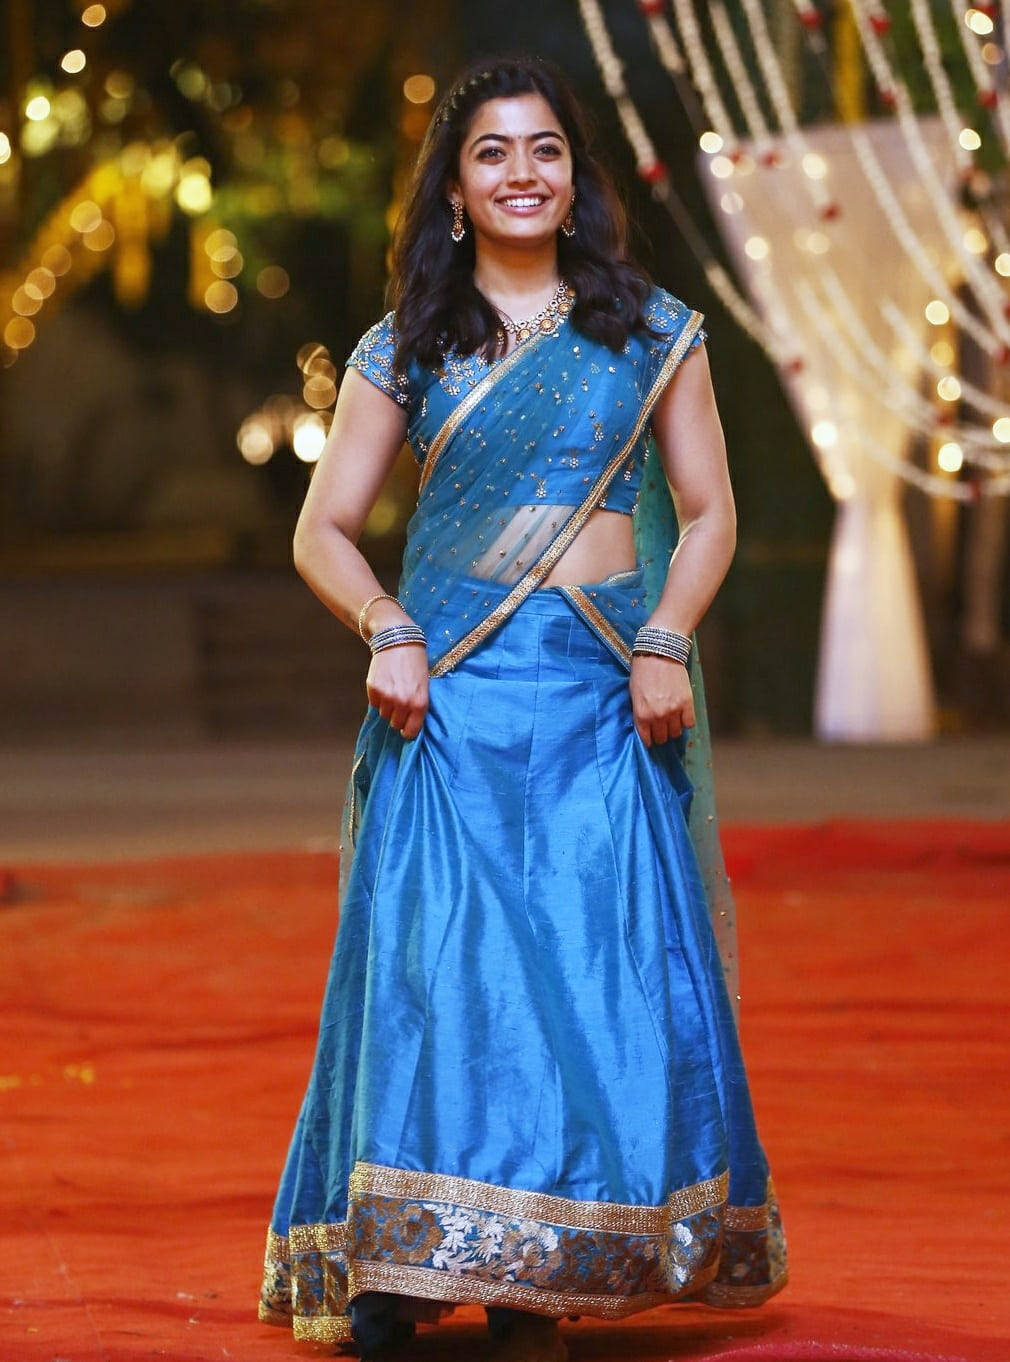 Caption: Graceful Telugu Heroine In Blue Sari